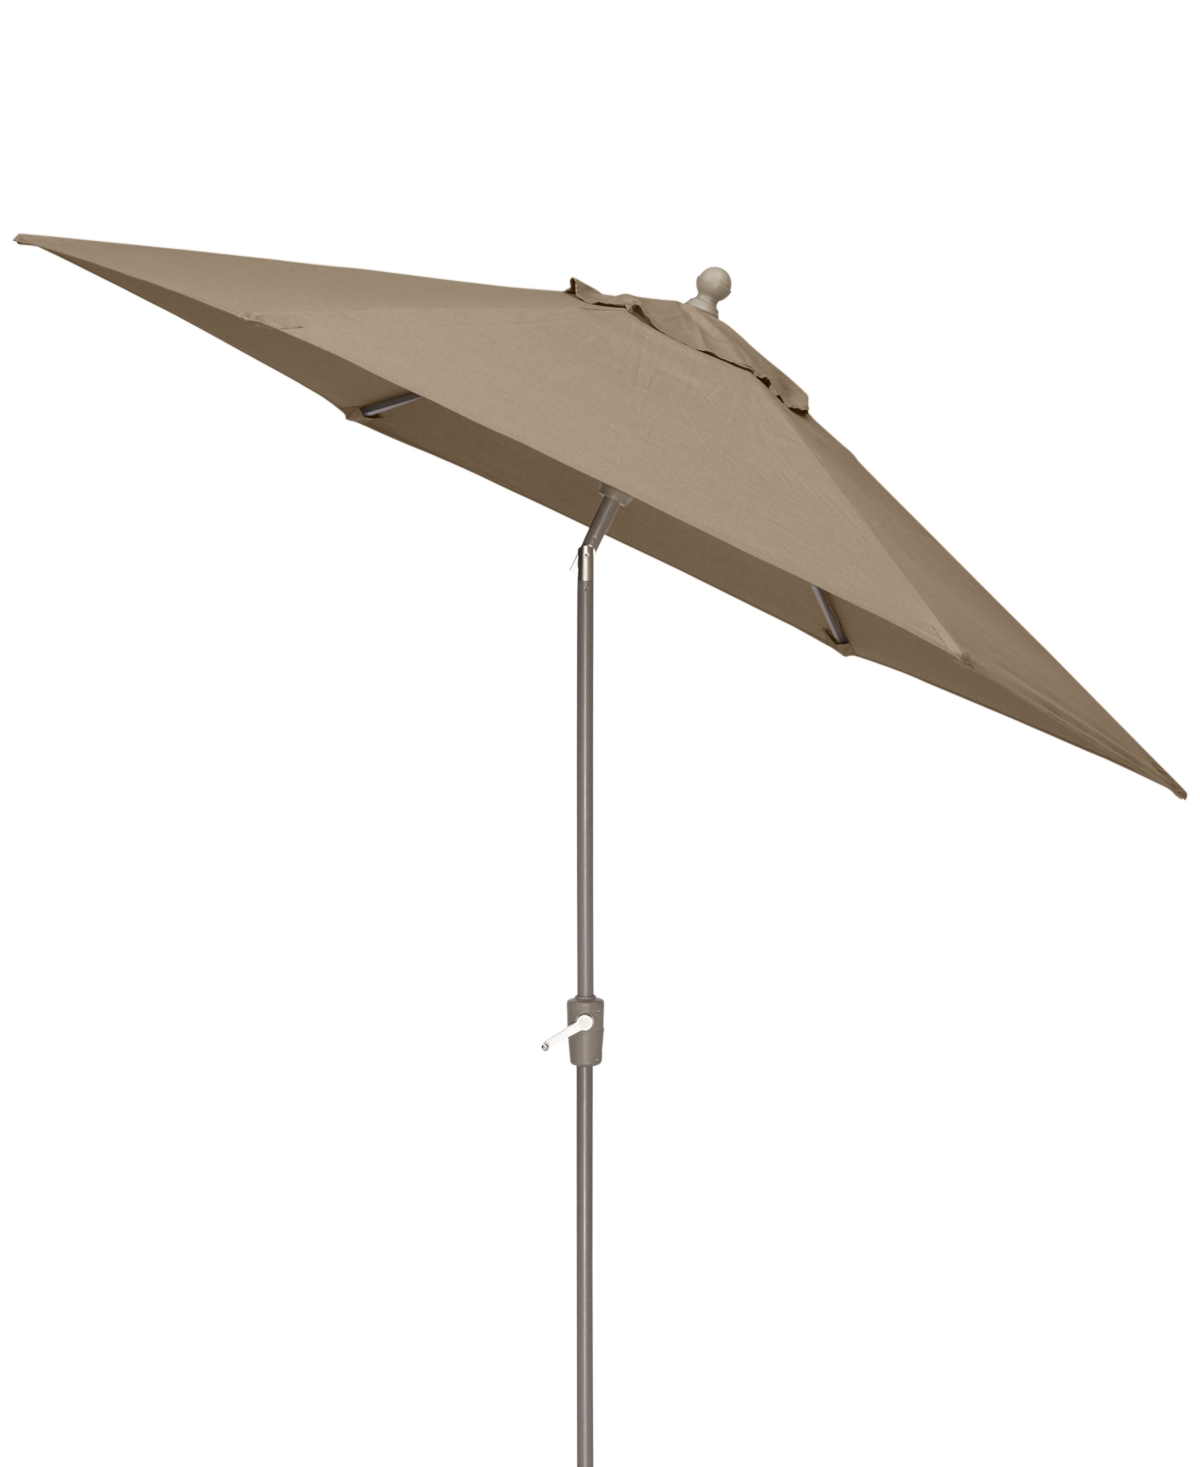 Agio Wayland Outdoor 9' Auto-tilt Umbrella, Created For Macy's In Outdura Remy Pebble